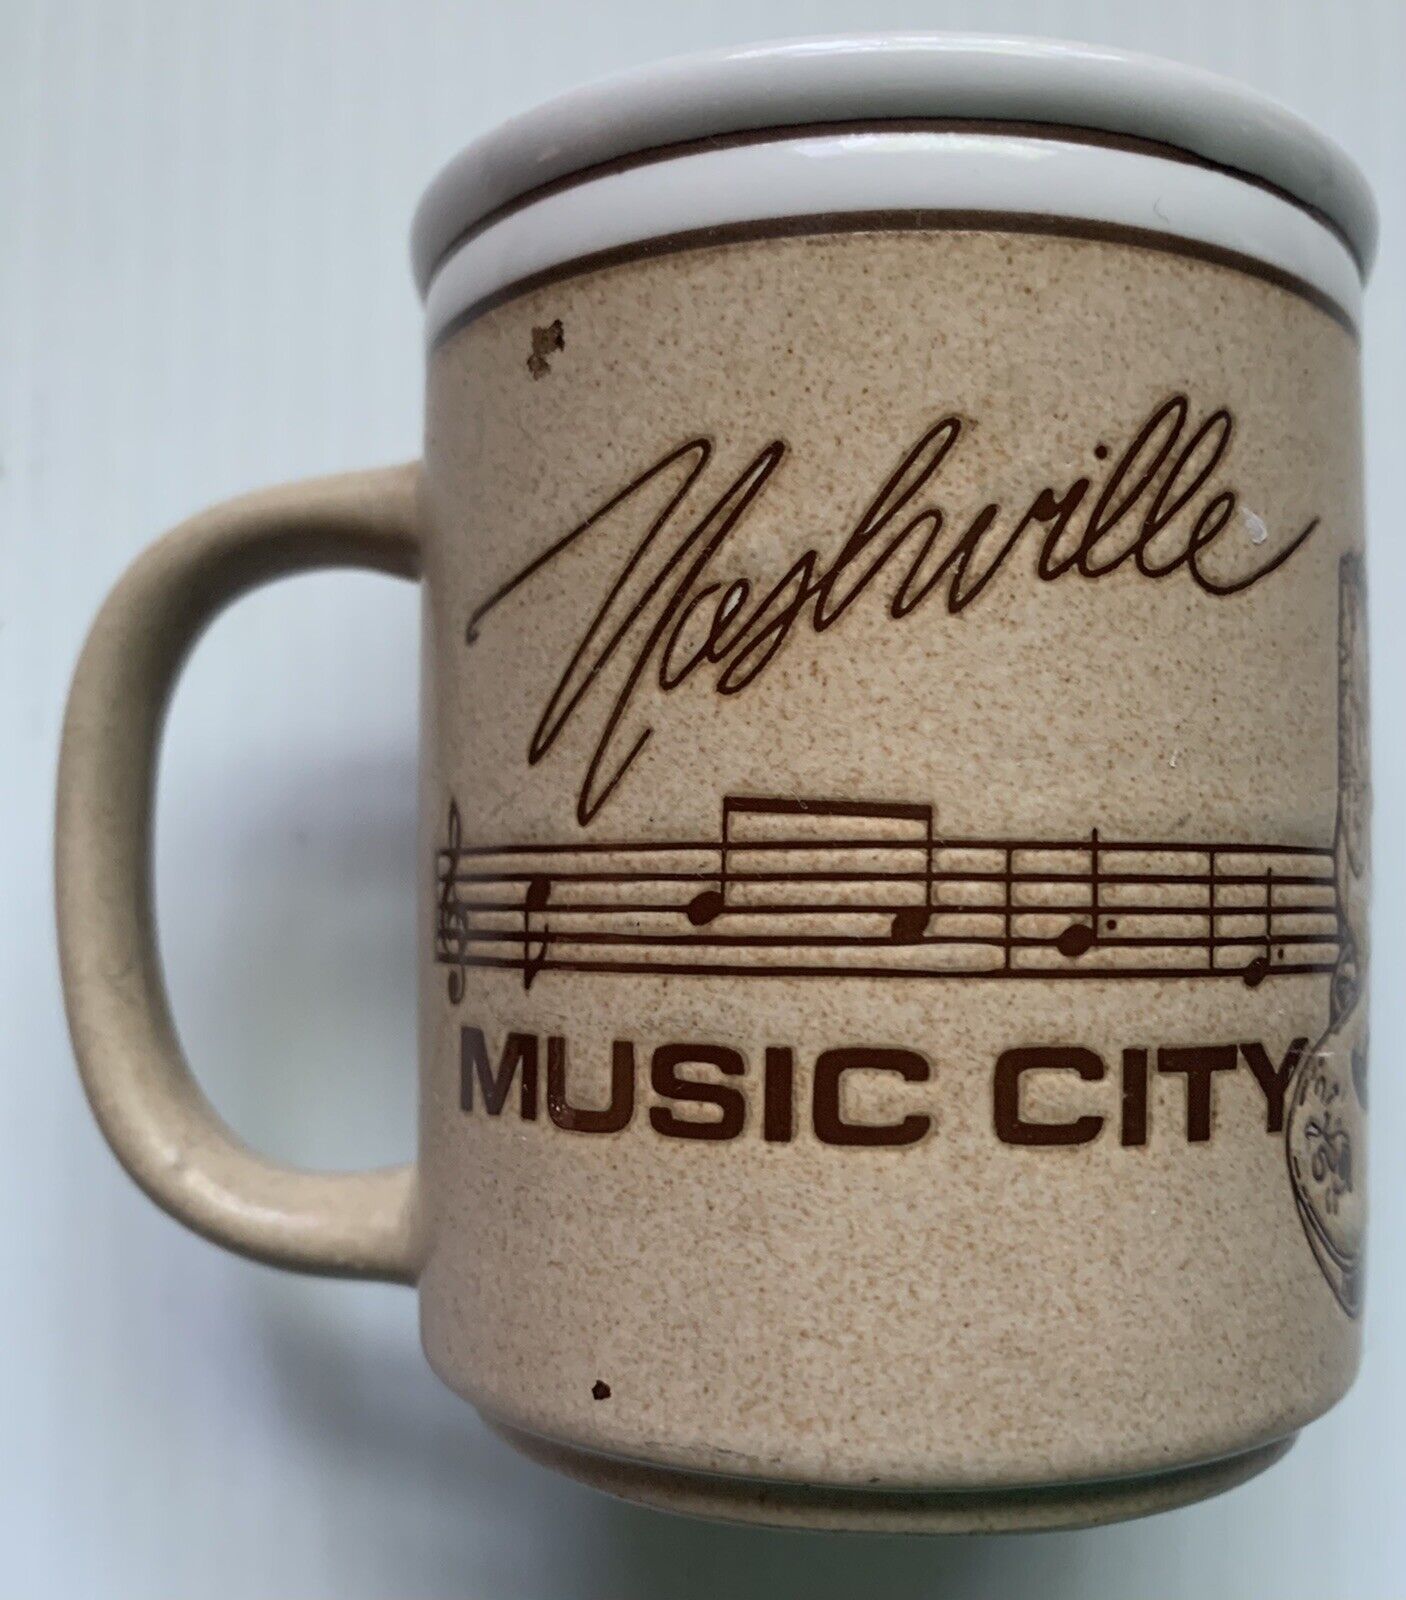 1985 NASHVILLE COUNTRY MUSIC CITY PORCELAIN COFFEE MUG, NASHVILLE, TN, VINTAGE